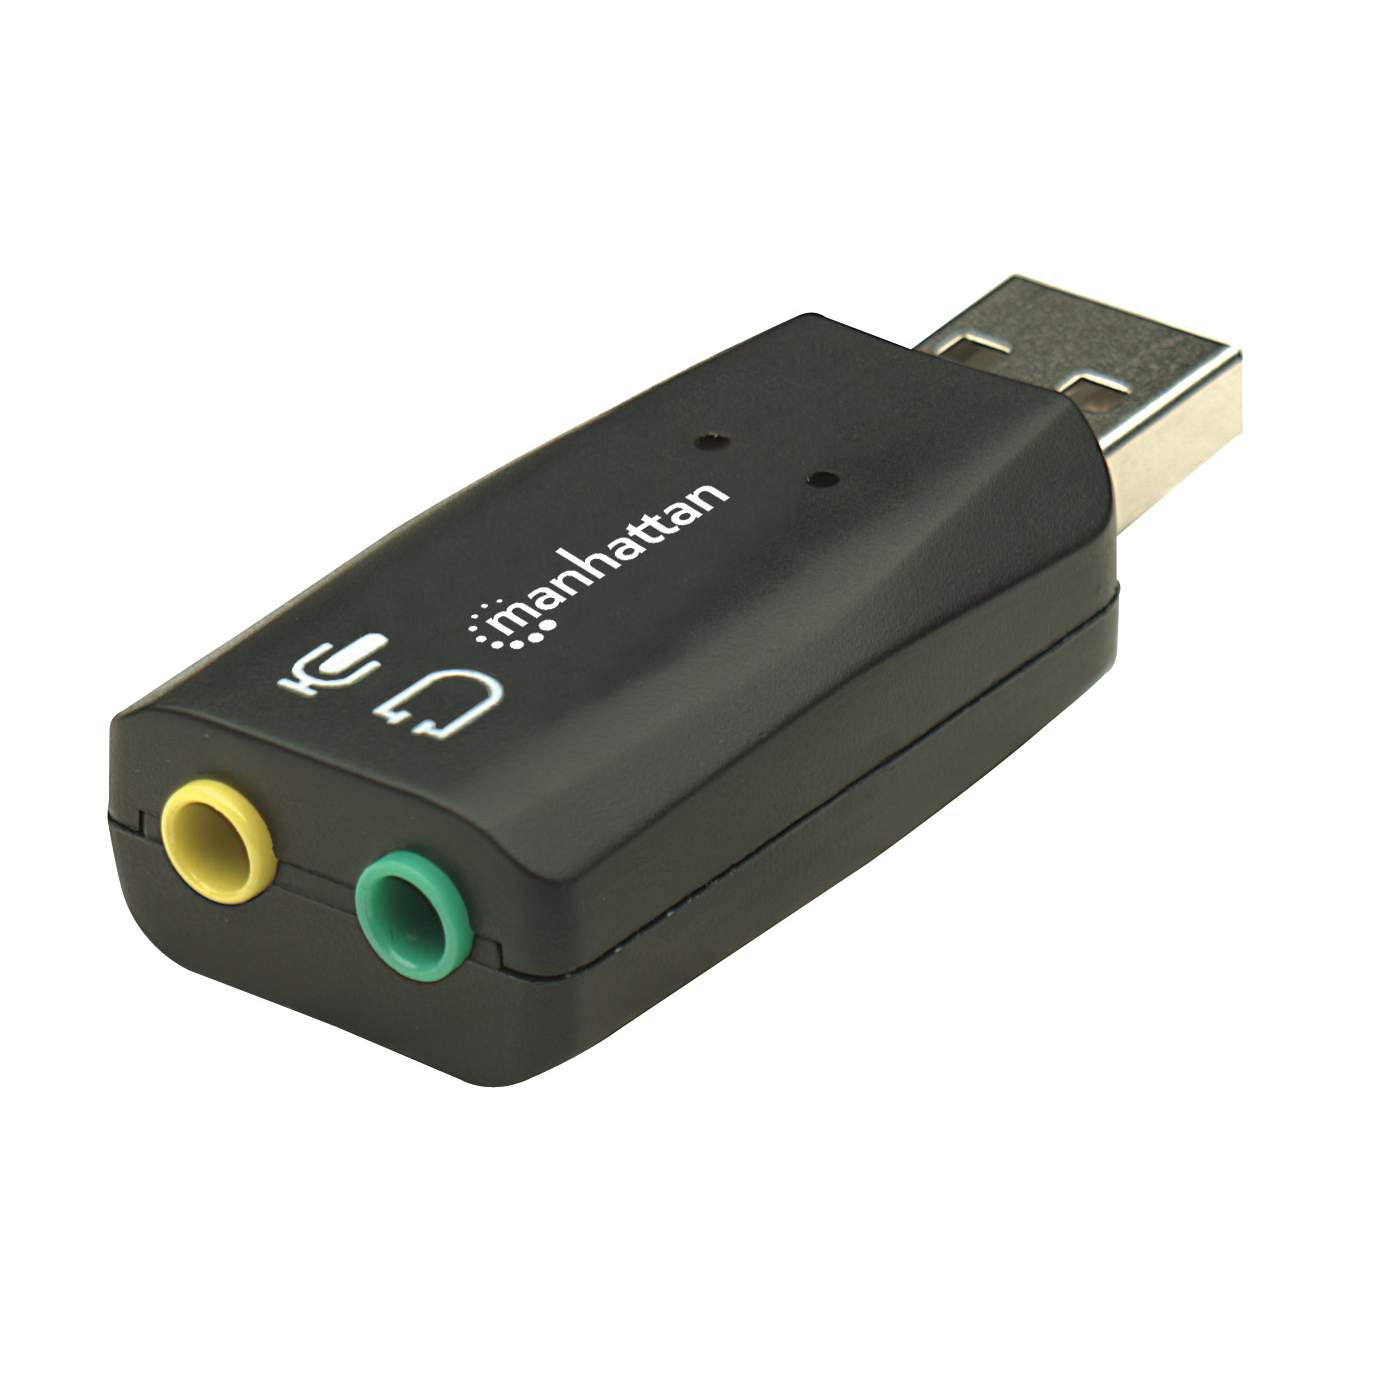 USB Typ C zu 3.5 mm AUX Audio Adapter